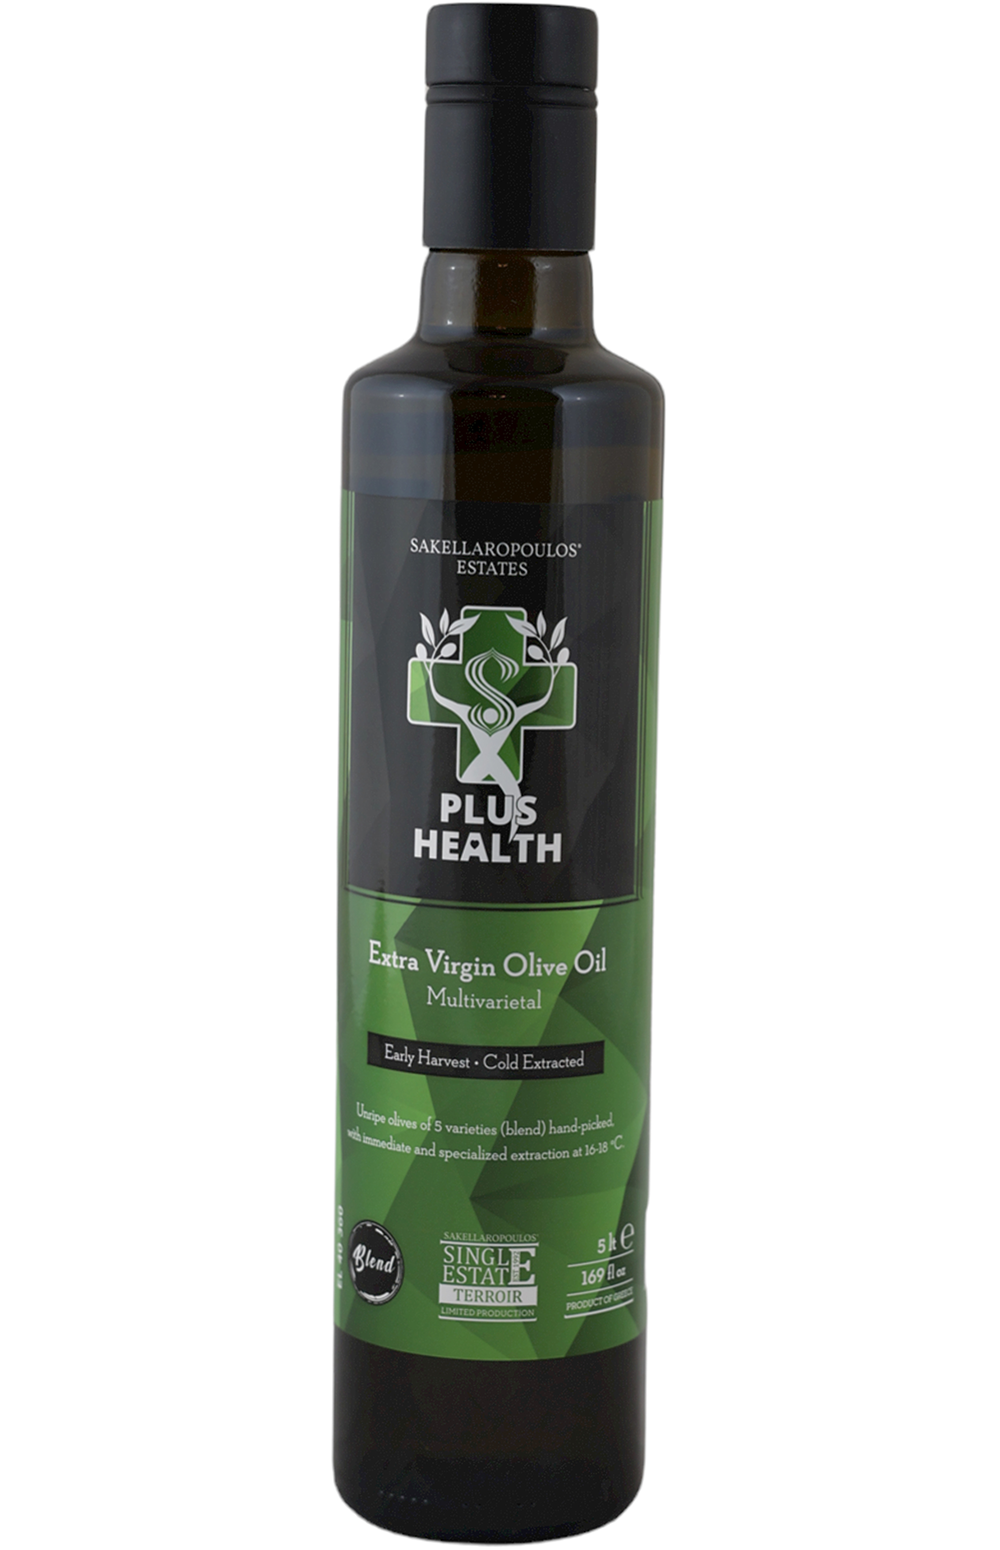 Plus Health Green Multivarietal EVOO Olive Oil